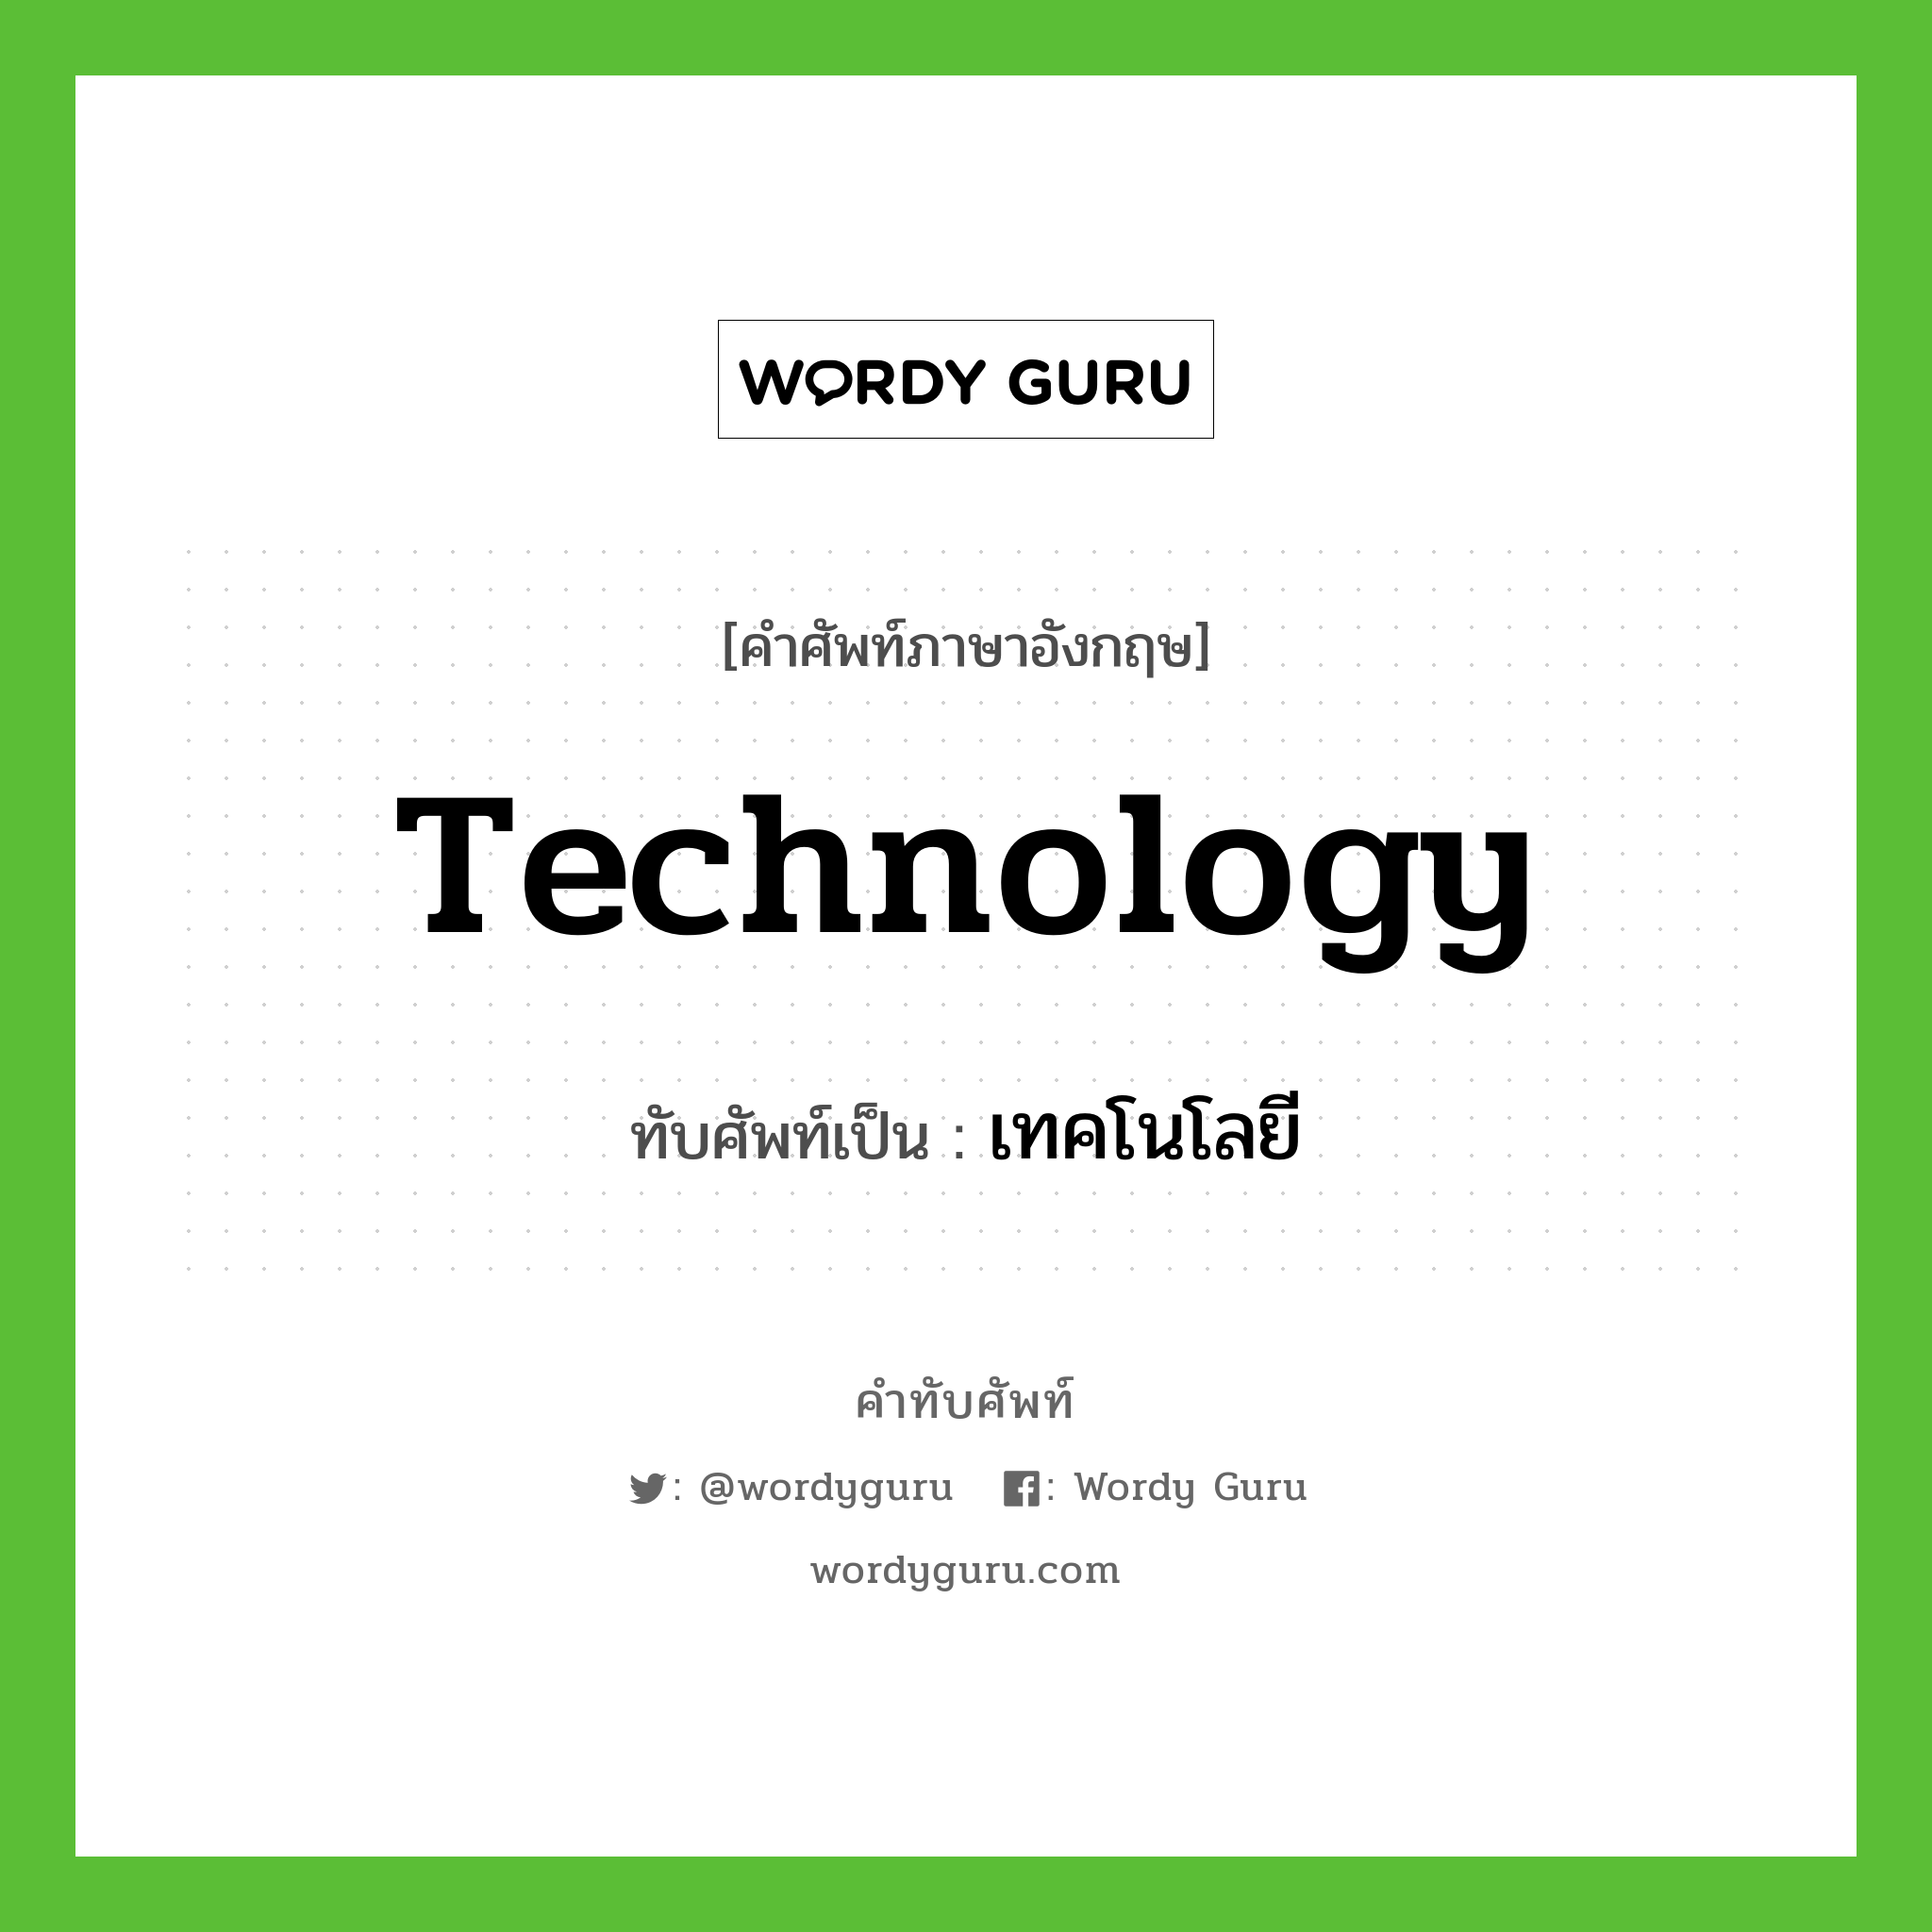 technology เขียนเป็นคำไทยว่าอะไร?, คำศัพท์ภาษาอังกฤษ technology ทับศัพท์เป็น เทคโนโลยี